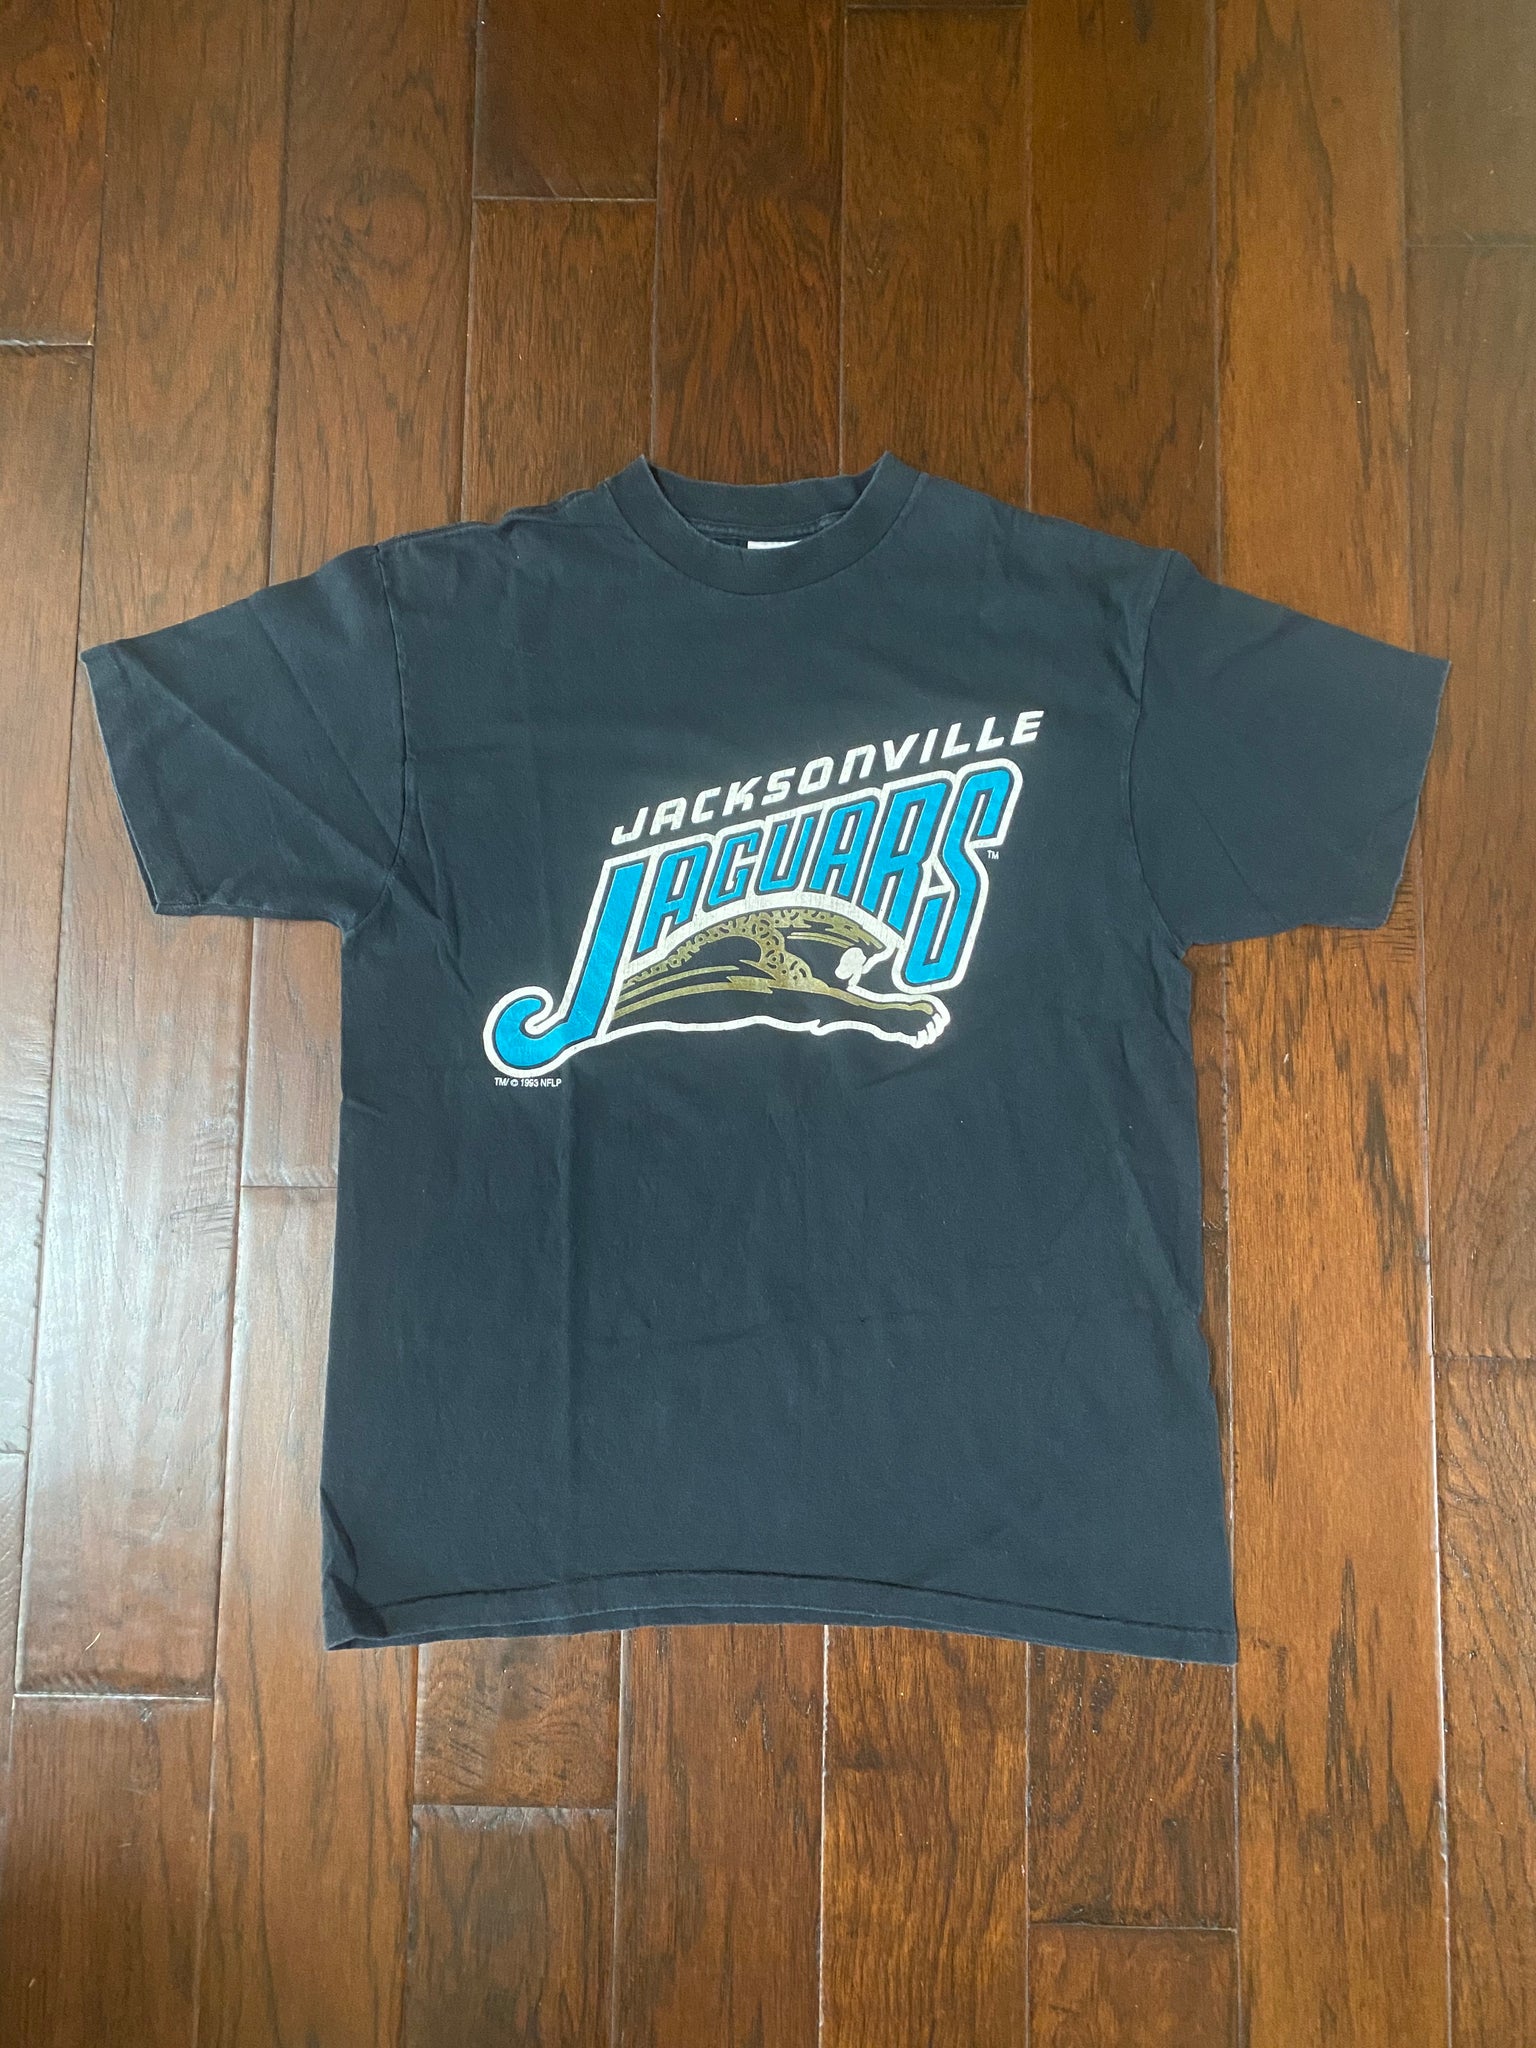 Jacksonville Jaguars 1993 Vintage Distressed T-shirt – The Vintage Cowboy TX